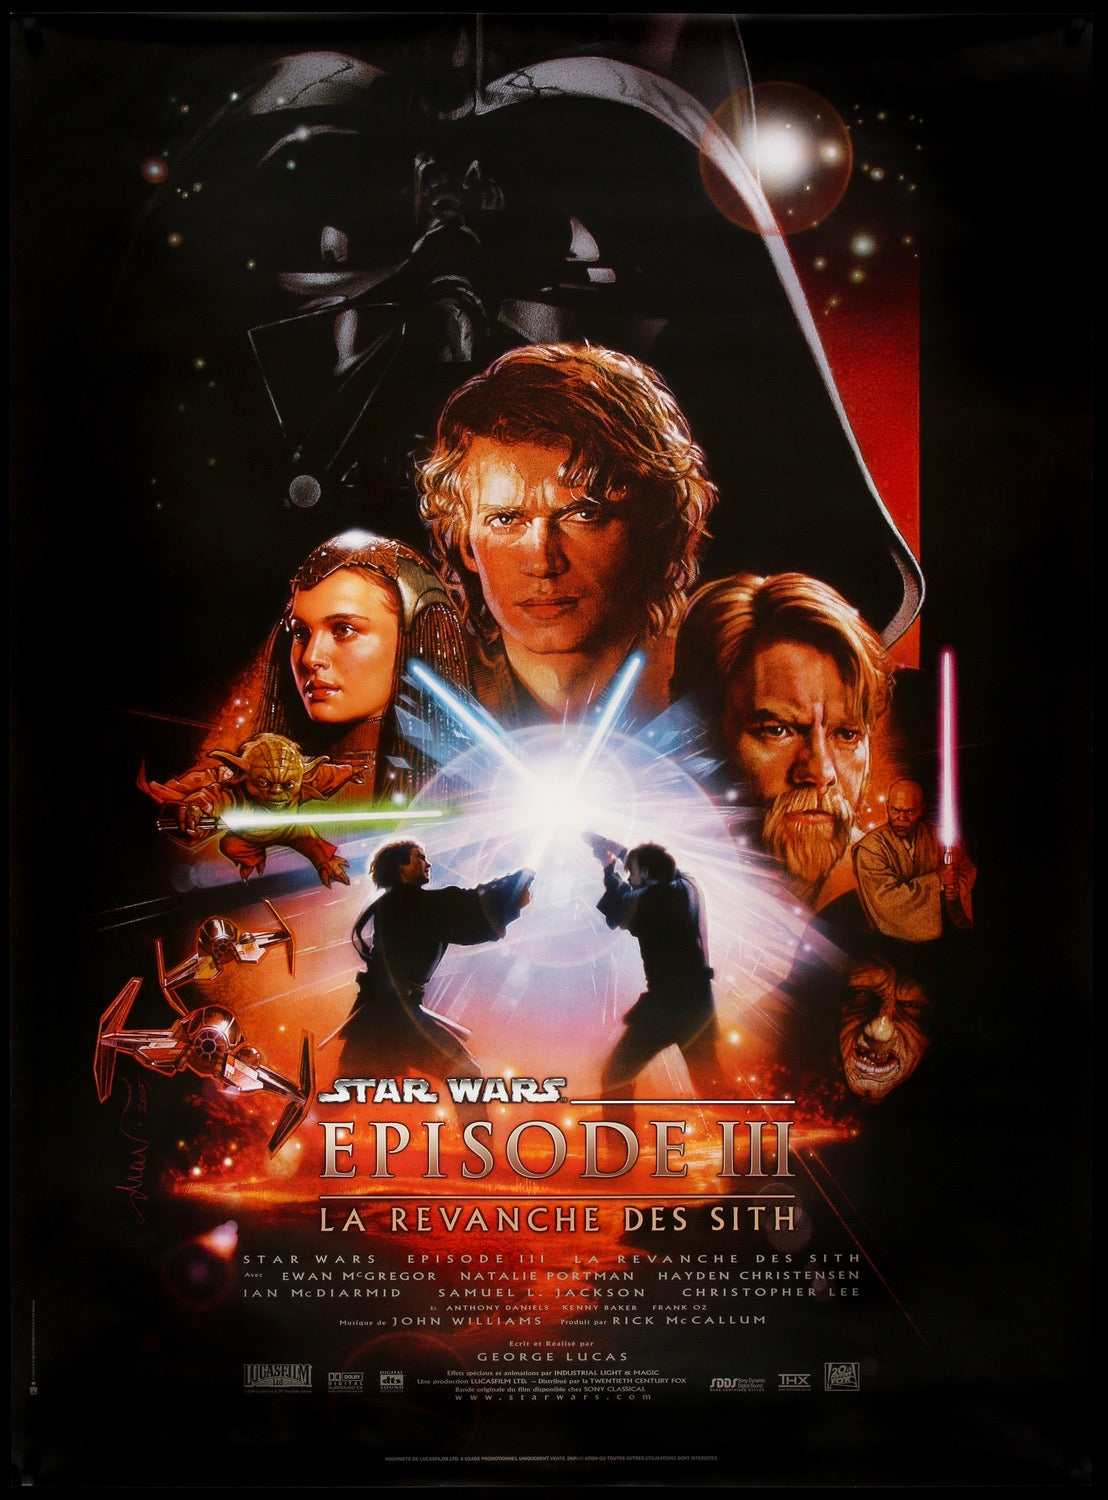 Original Star Wars Movie Movie Posters at Original Film Art - Original Film  Art - Vintage Movie Posters